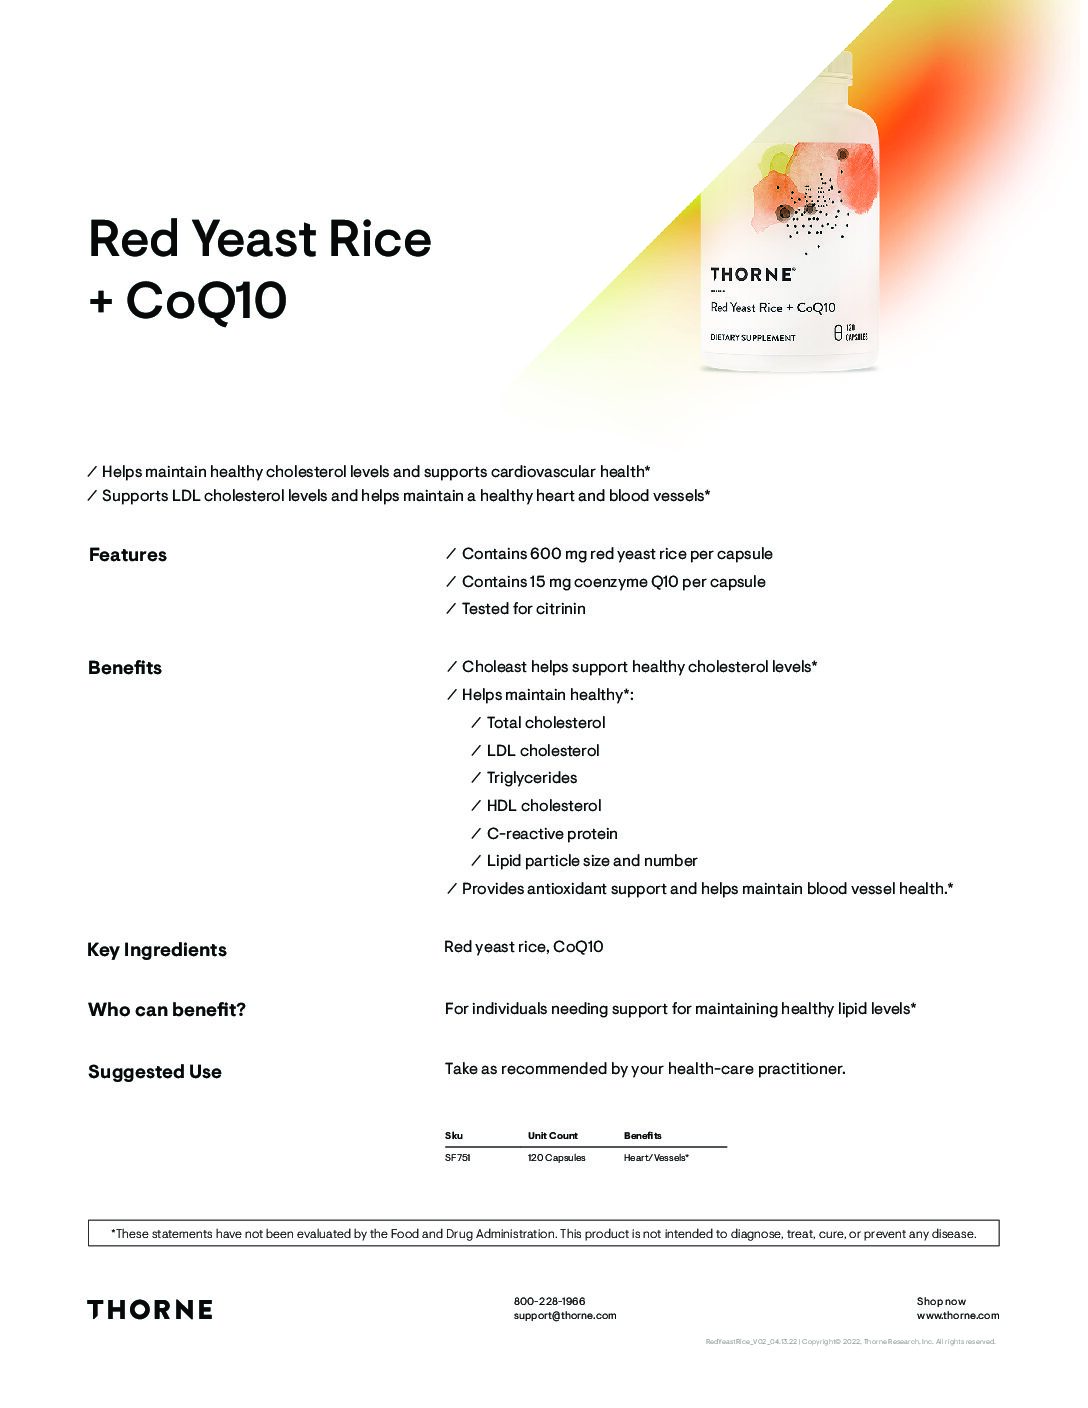 Red Yeast Rice + CoQ10